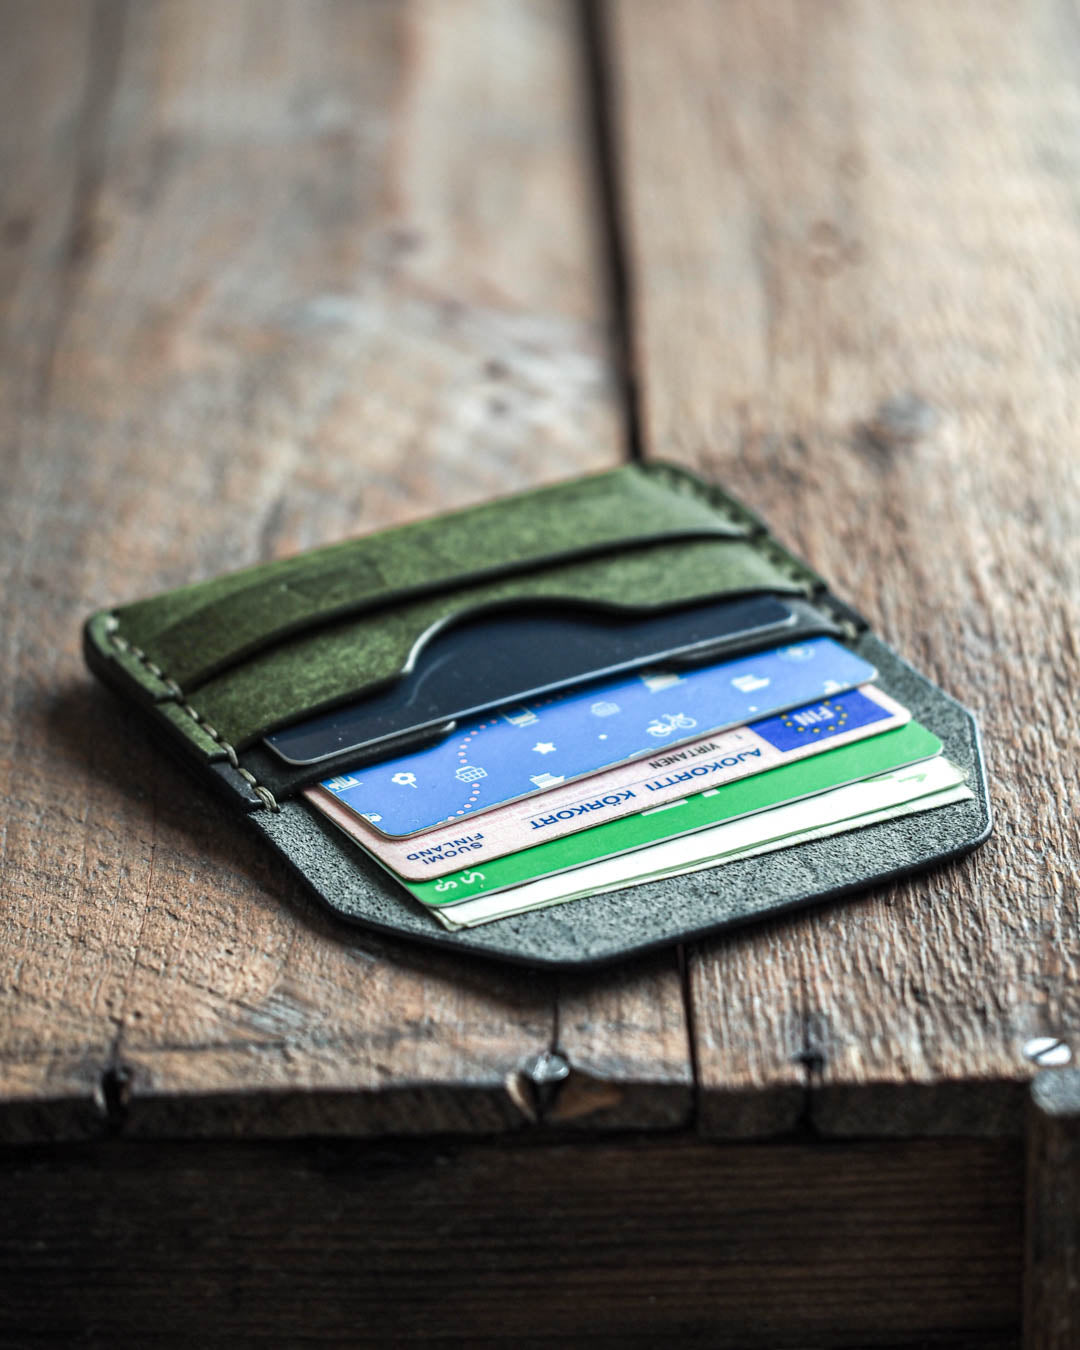 Luava handmade leather wallet Gofer ranger front open